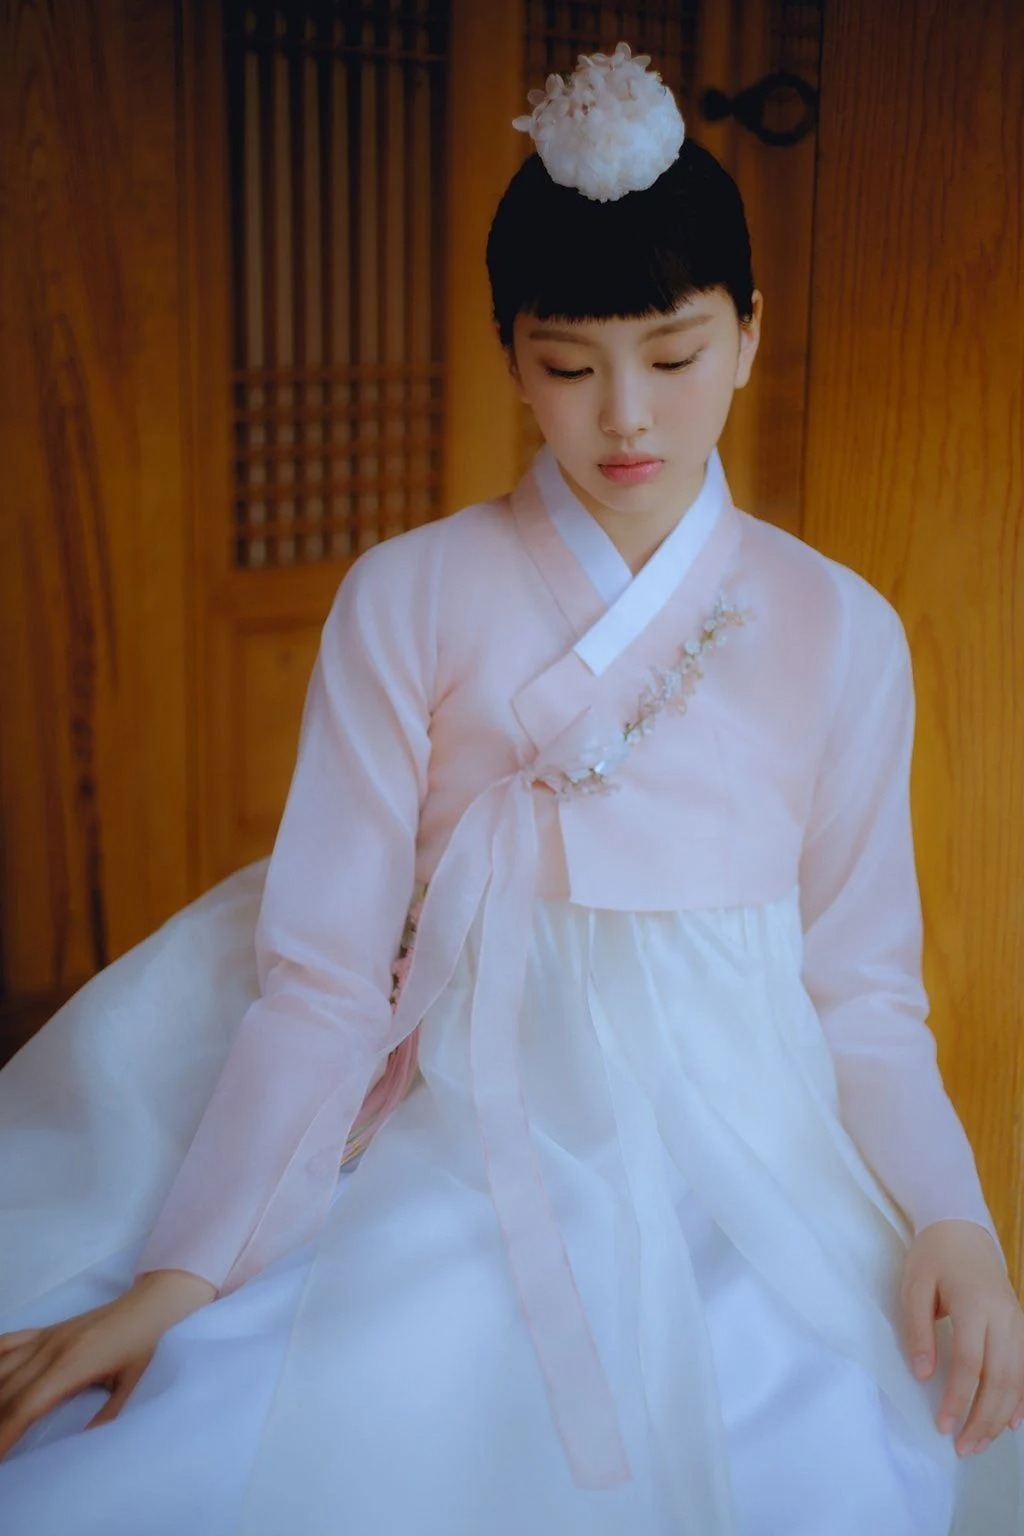 NU'EST JIN's Hanbok pictorial for Chuseok is released